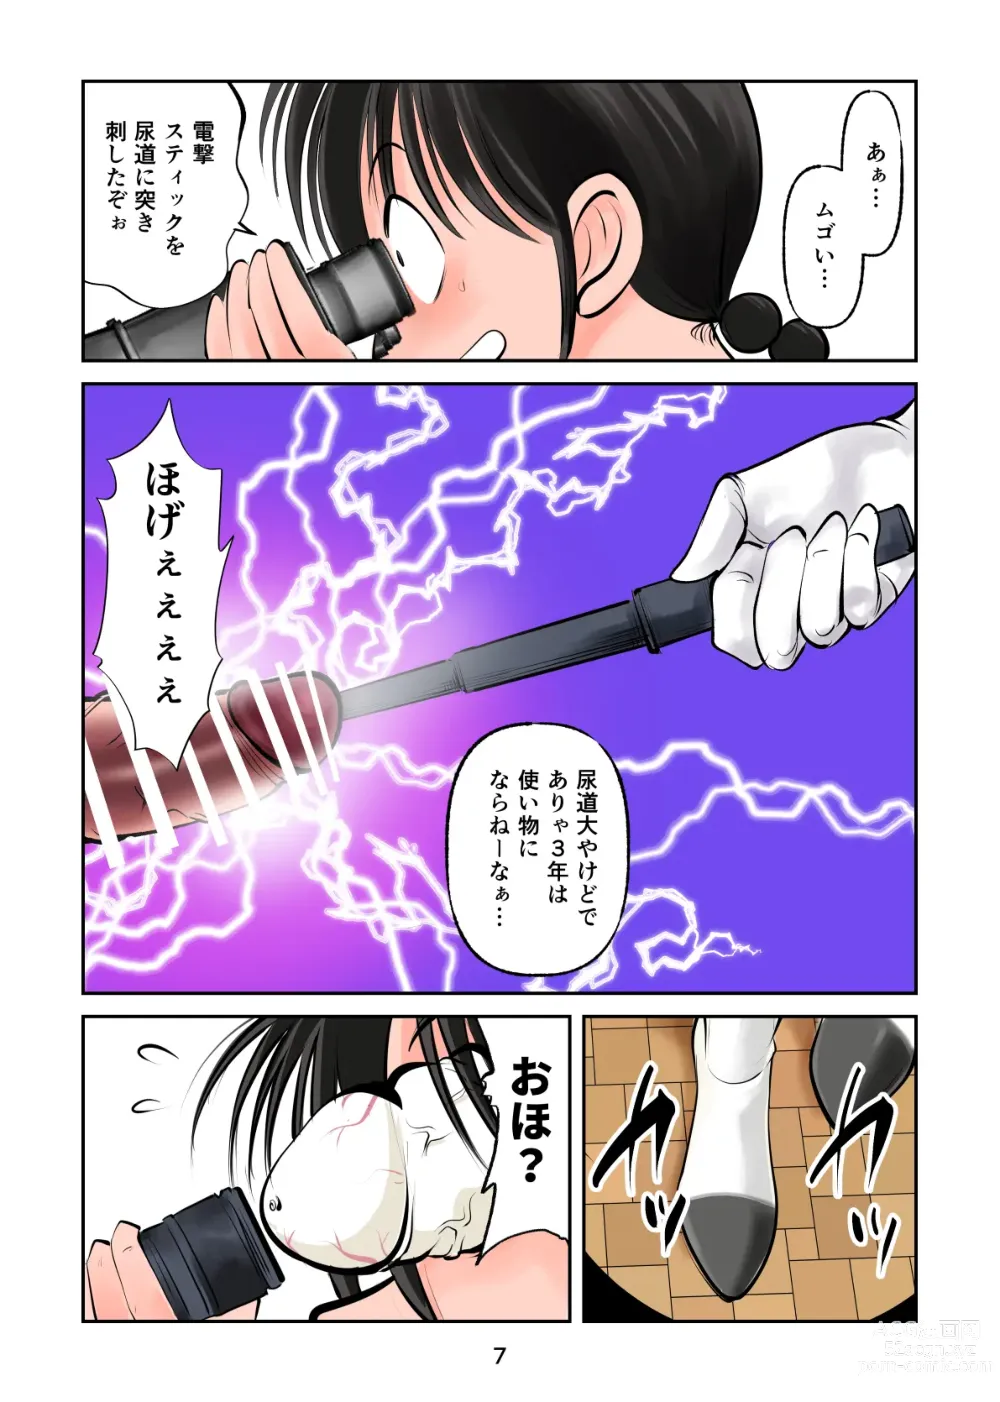 Page 7 of doujinshi Jajjimento mara keri ageru